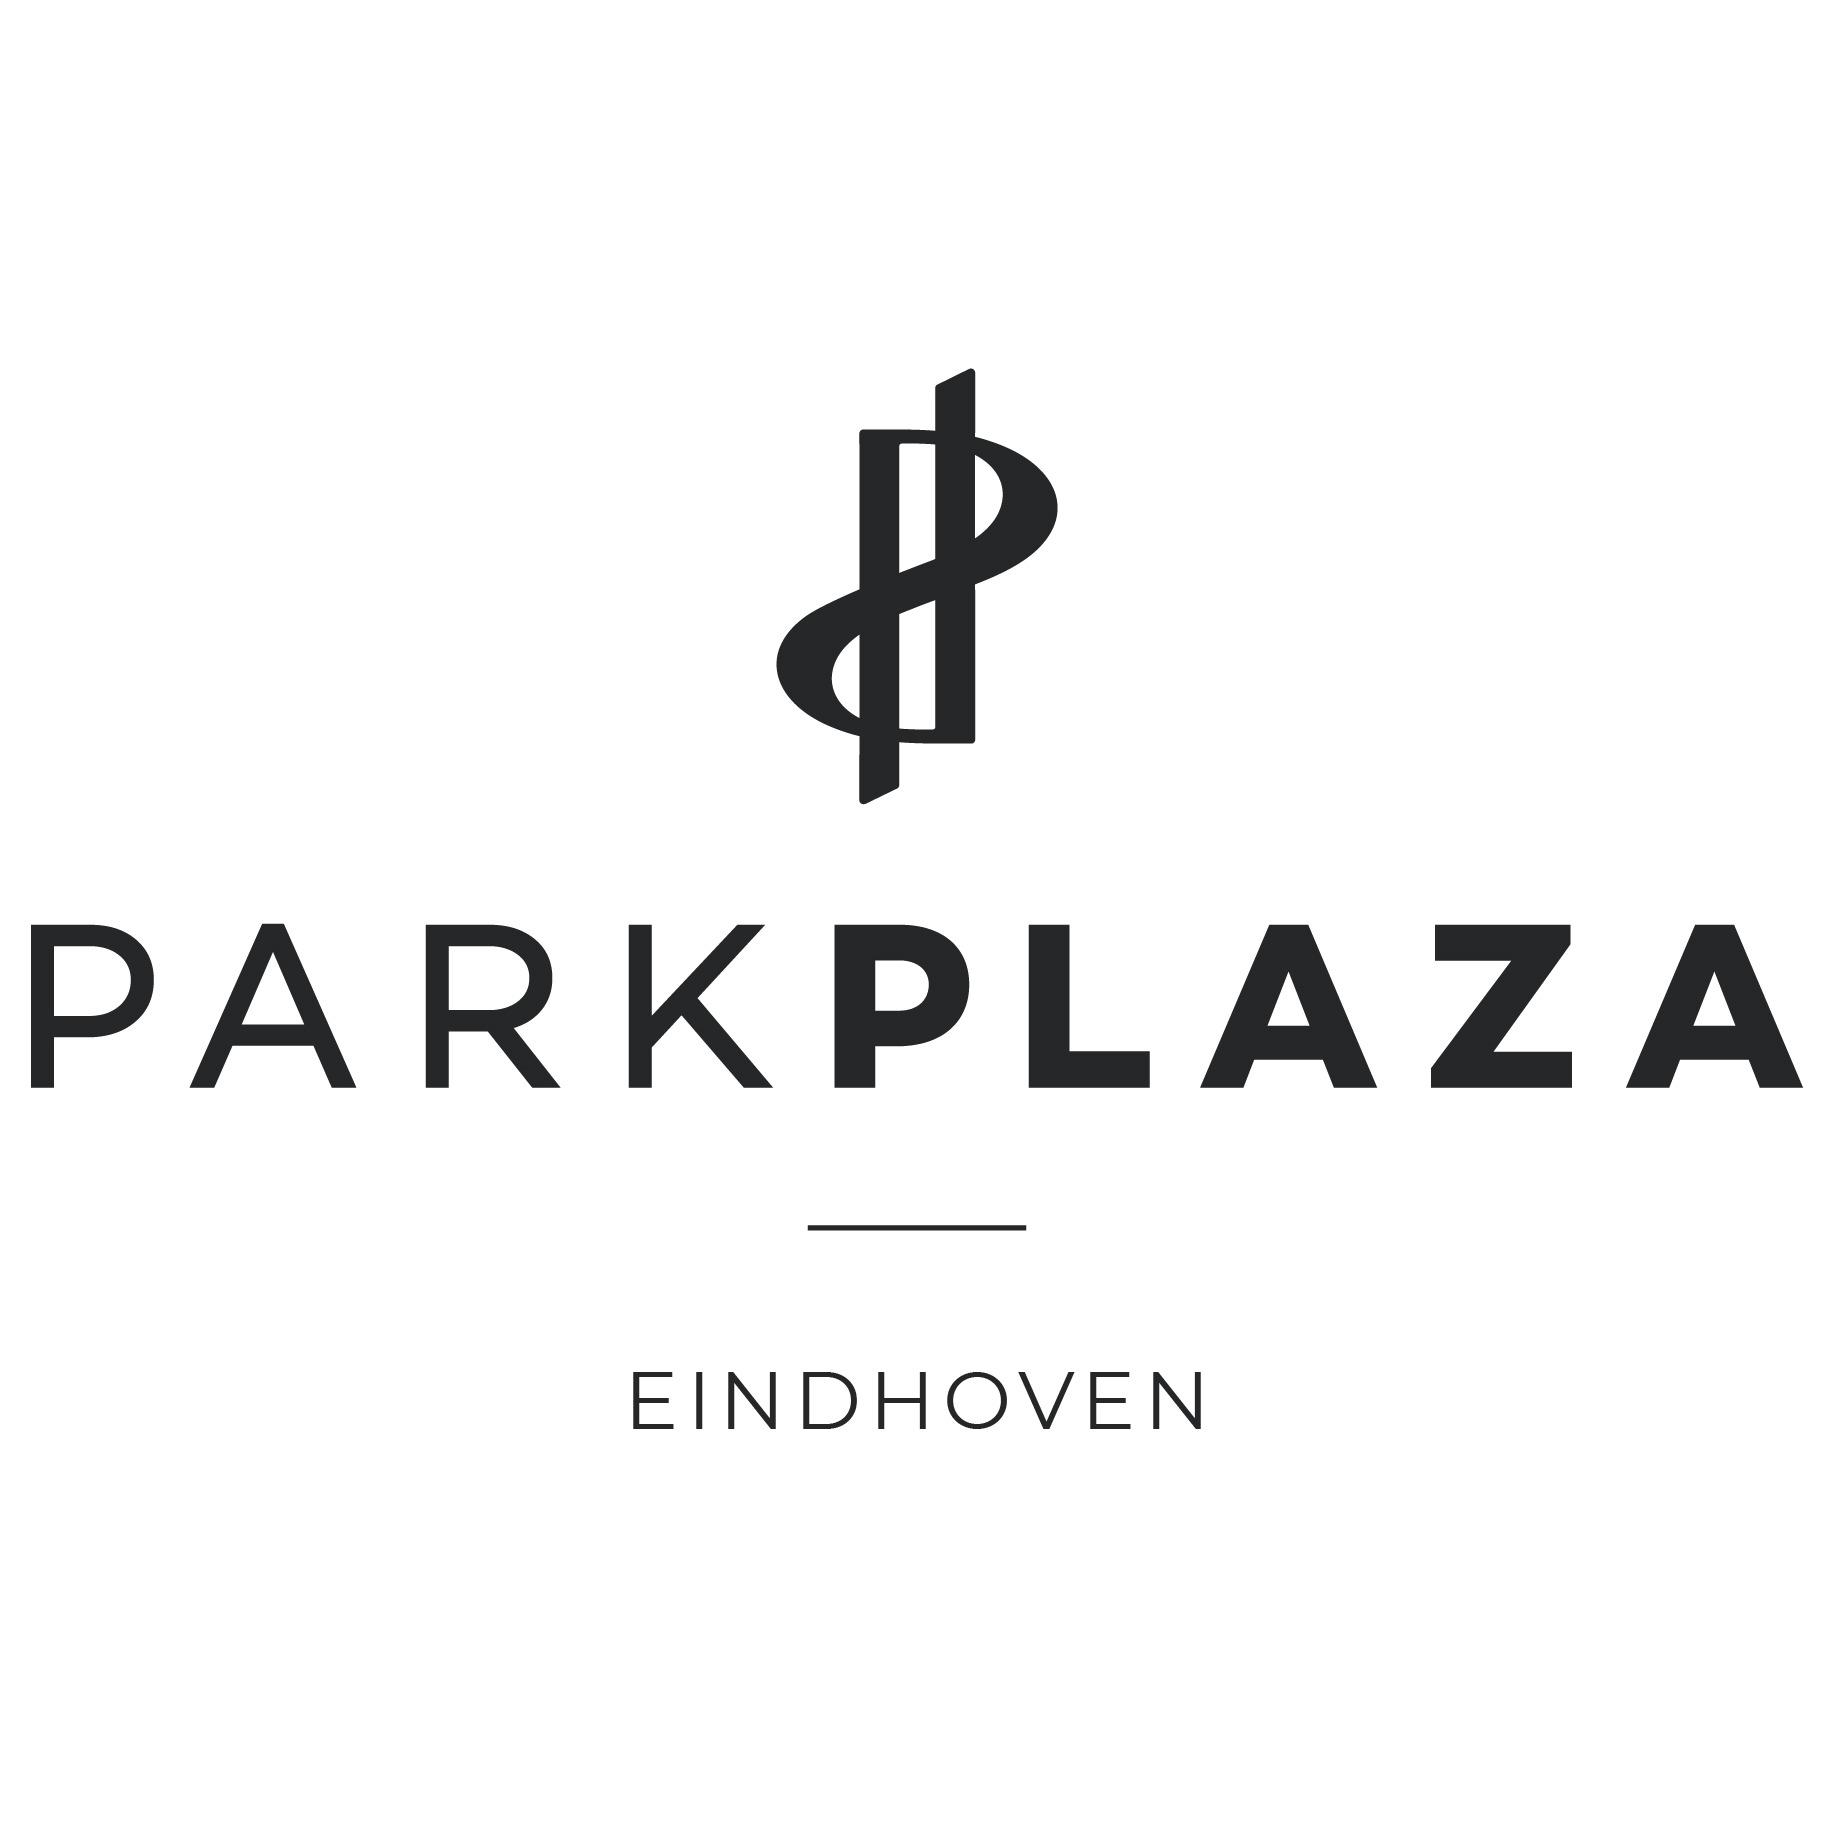 Park Plaza Eindhoven Logo